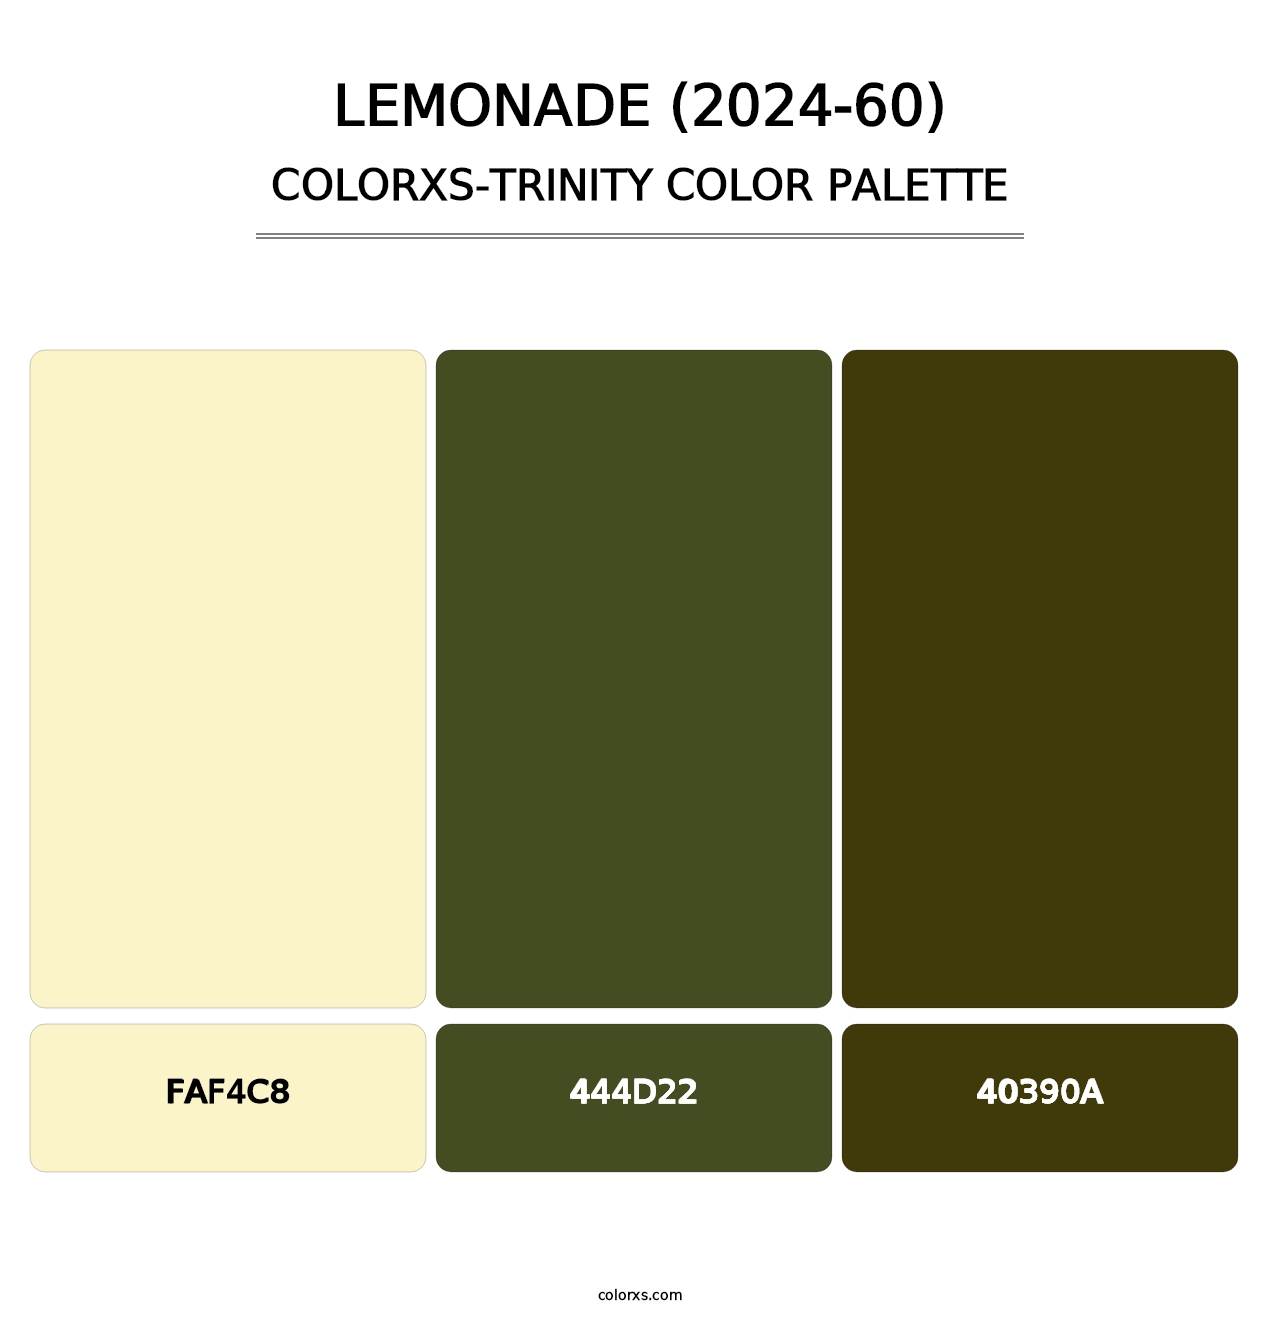 Lemonade (2024-60) - Colorxs Trinity Palette